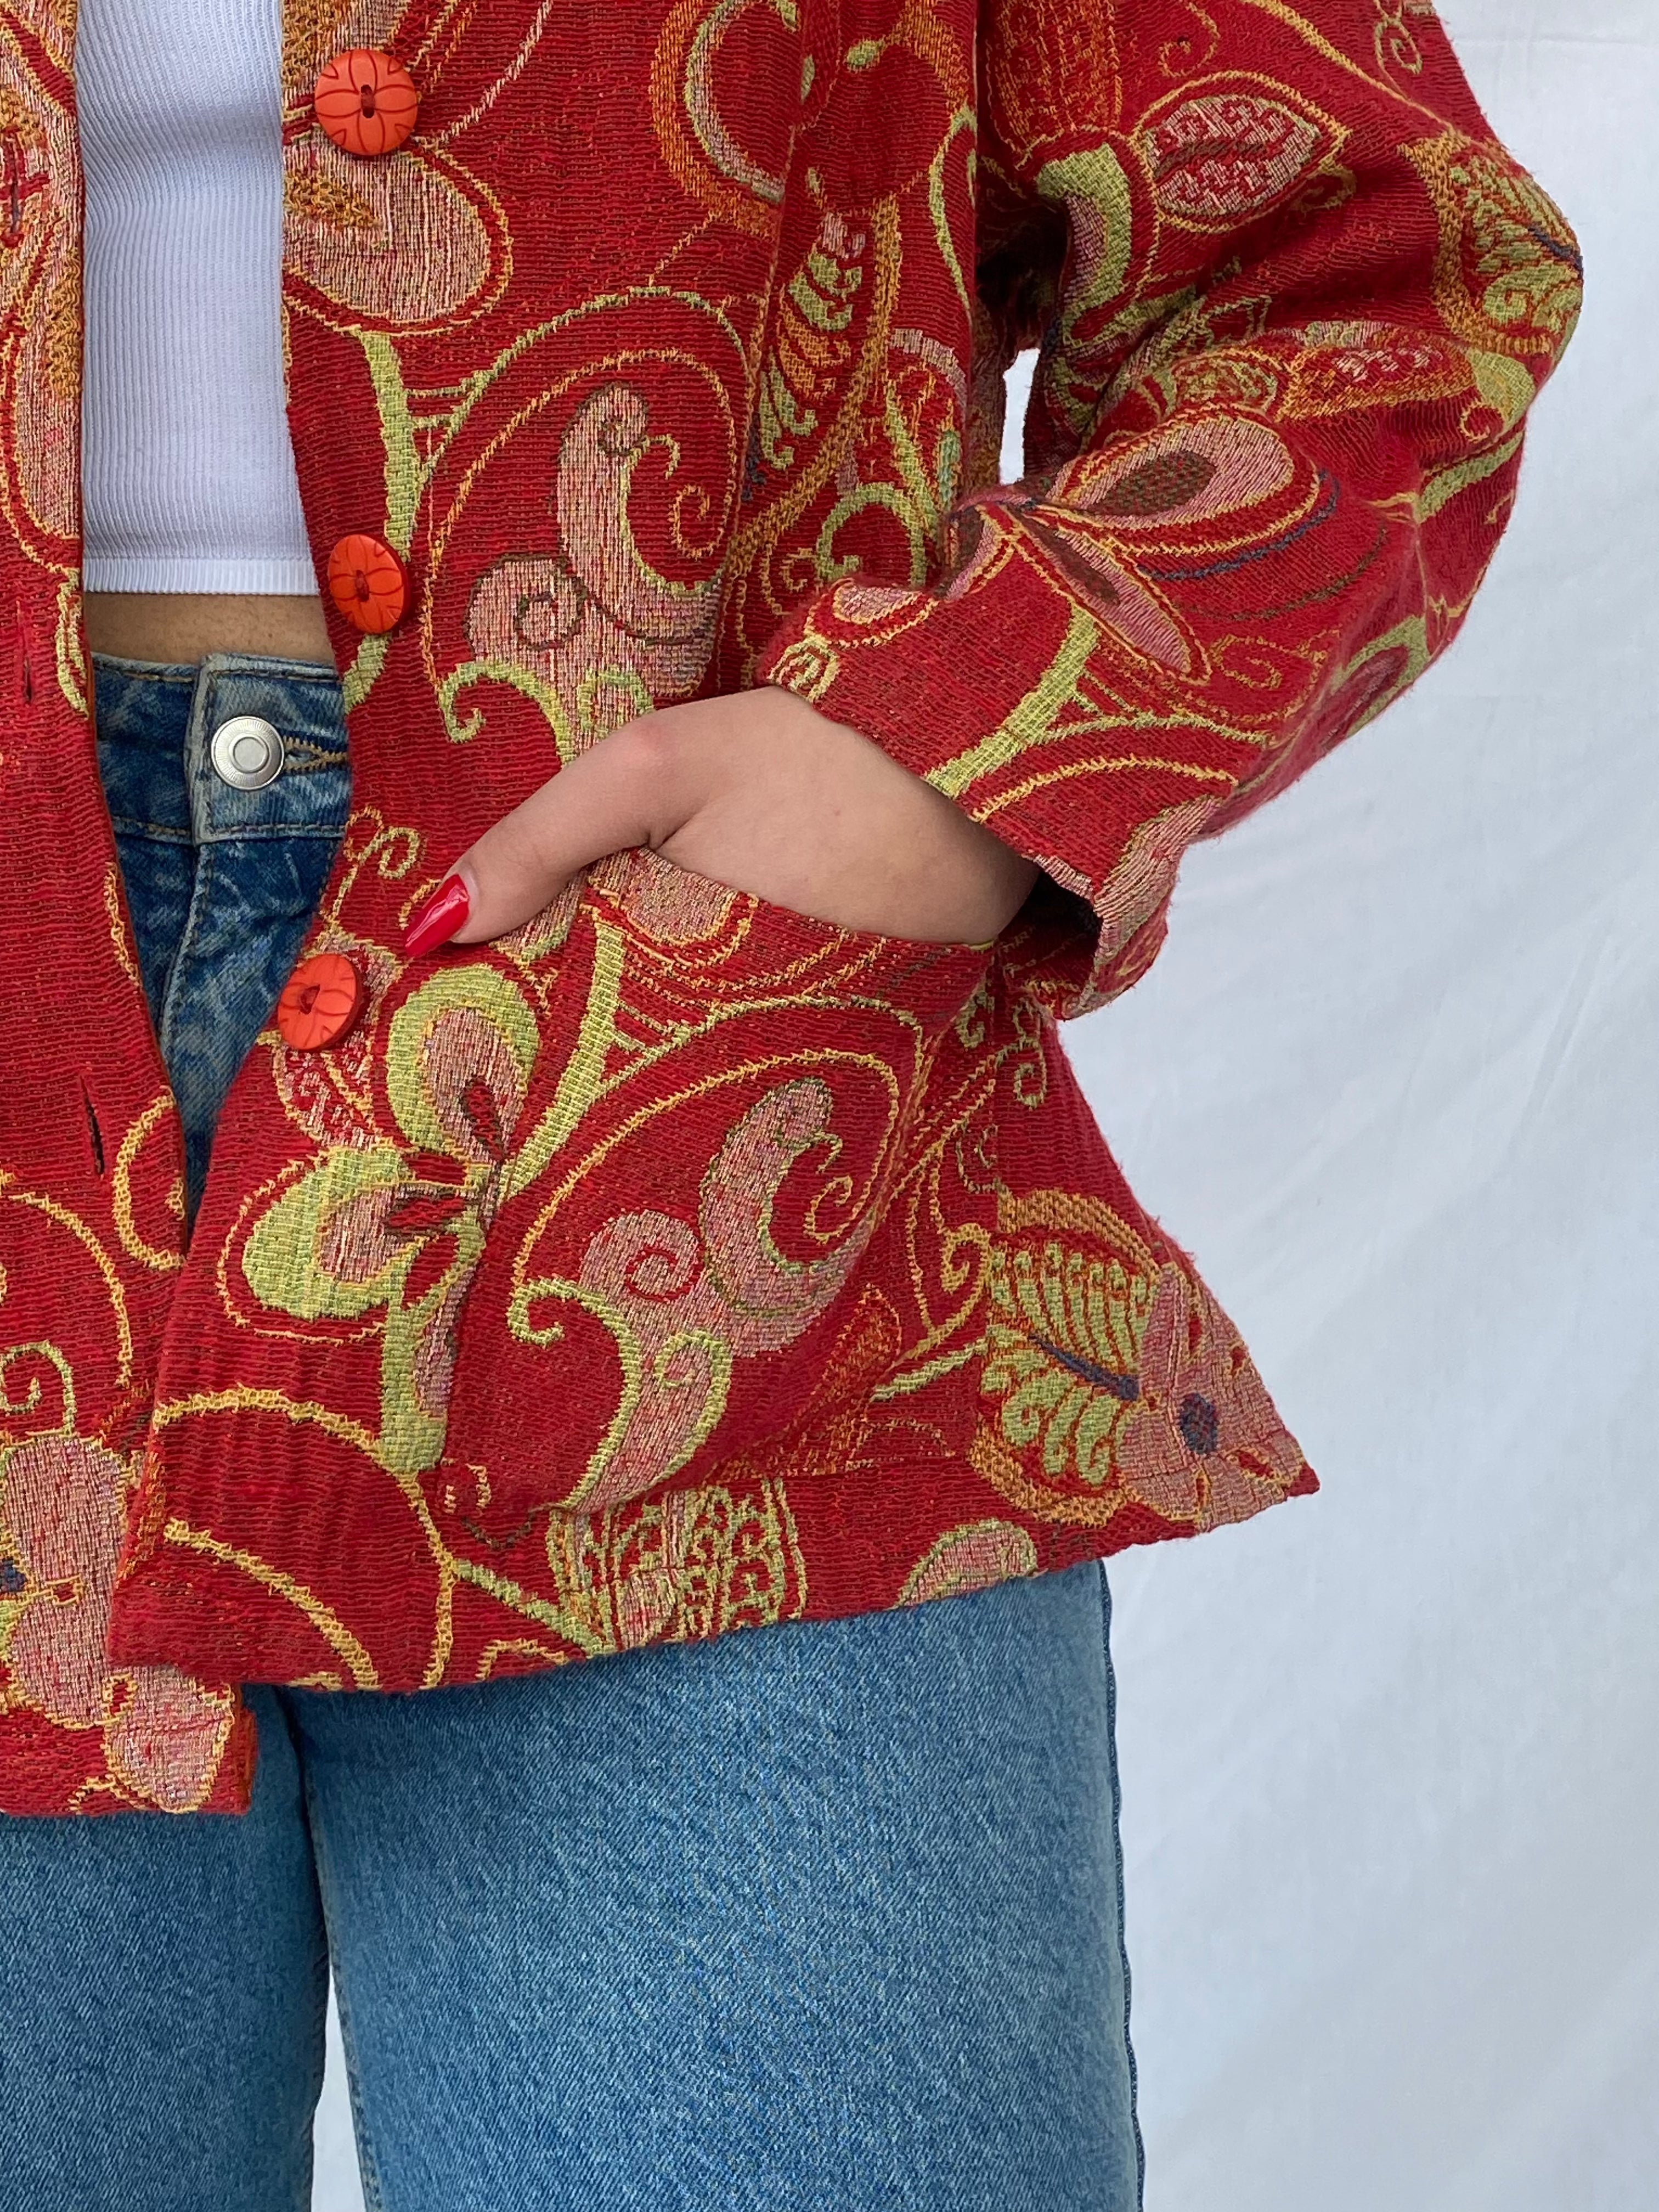 Vintage ANÜ By Natural Jacket - Balagan Vintage Jacket cotton, floral, floral embroidery, floral print, jacket, vintage